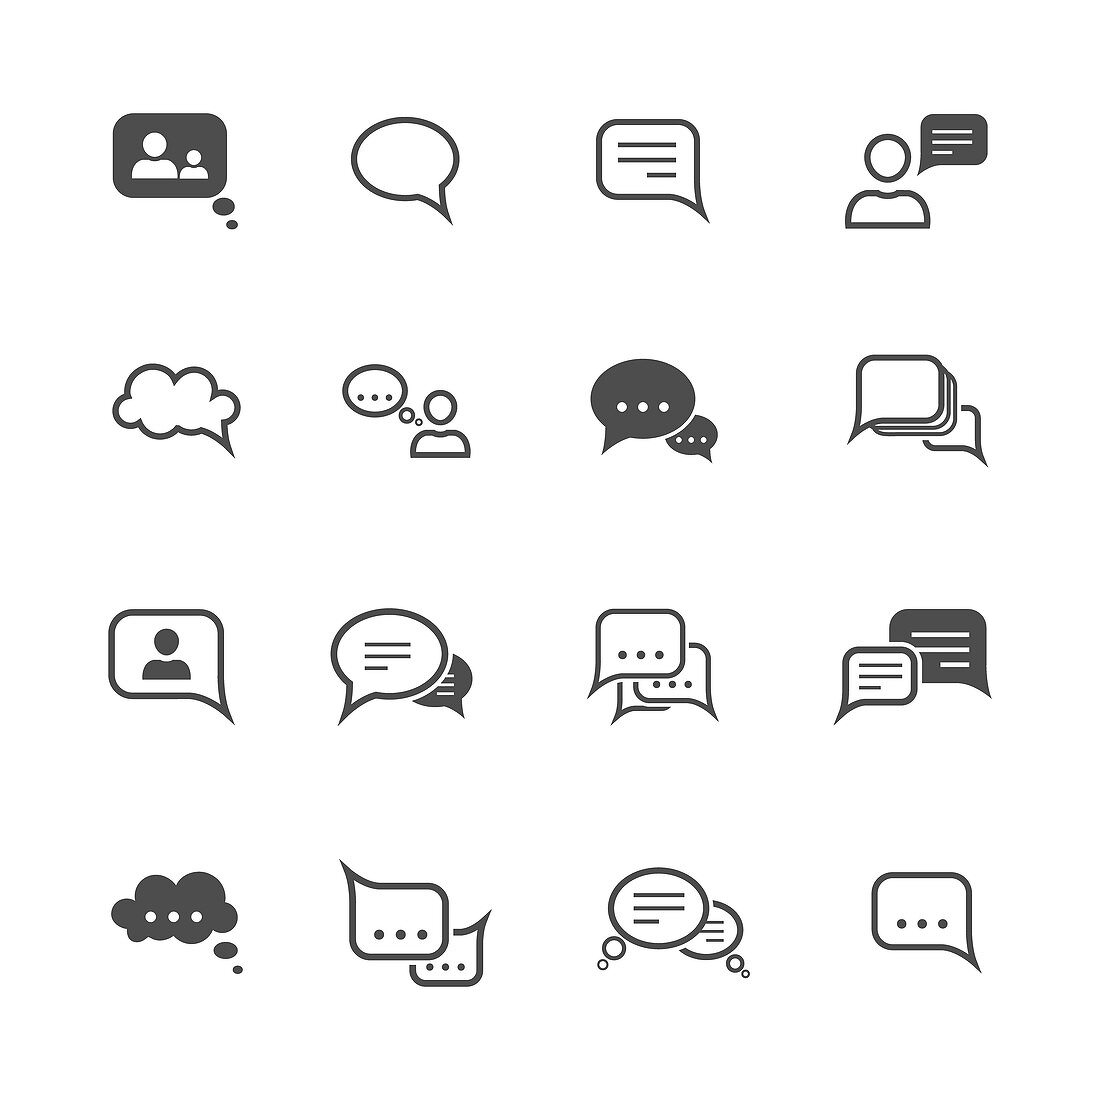 Message icons, illustration